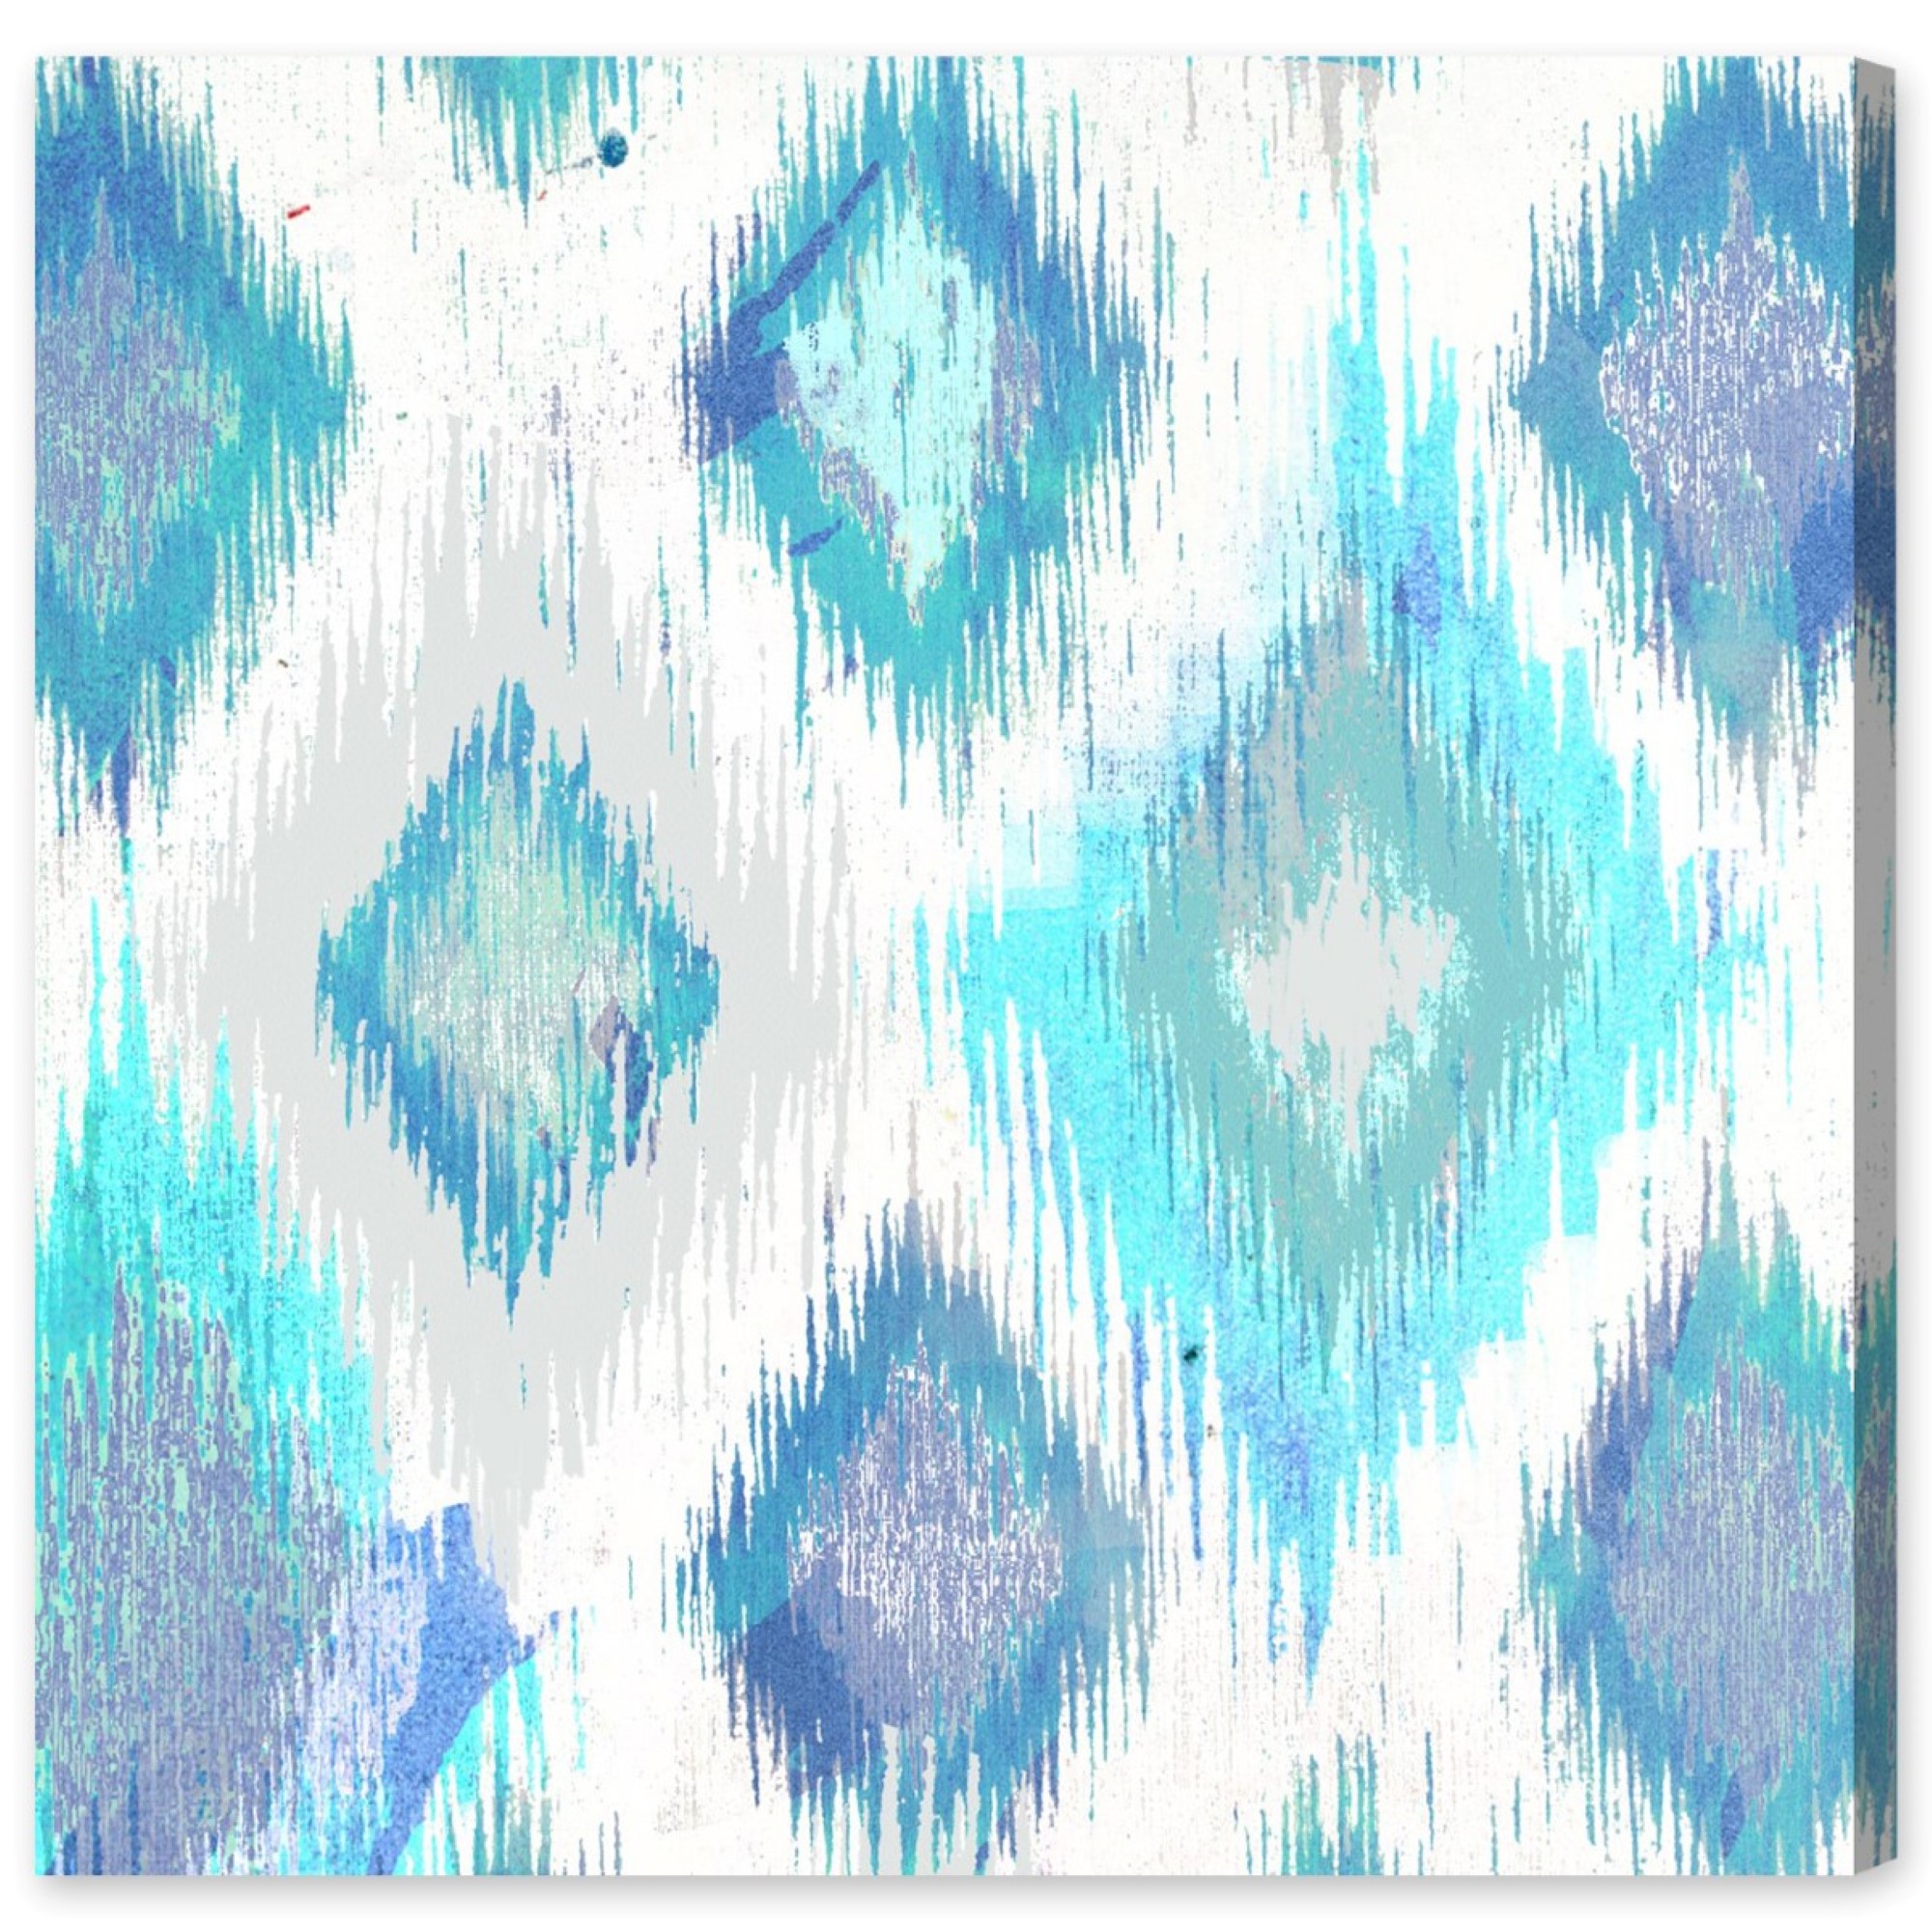 Wynwood Studio Abstract Wall Art Canvas Prints 'Del Mar' Geometric - Blue, White - image 1 of 5